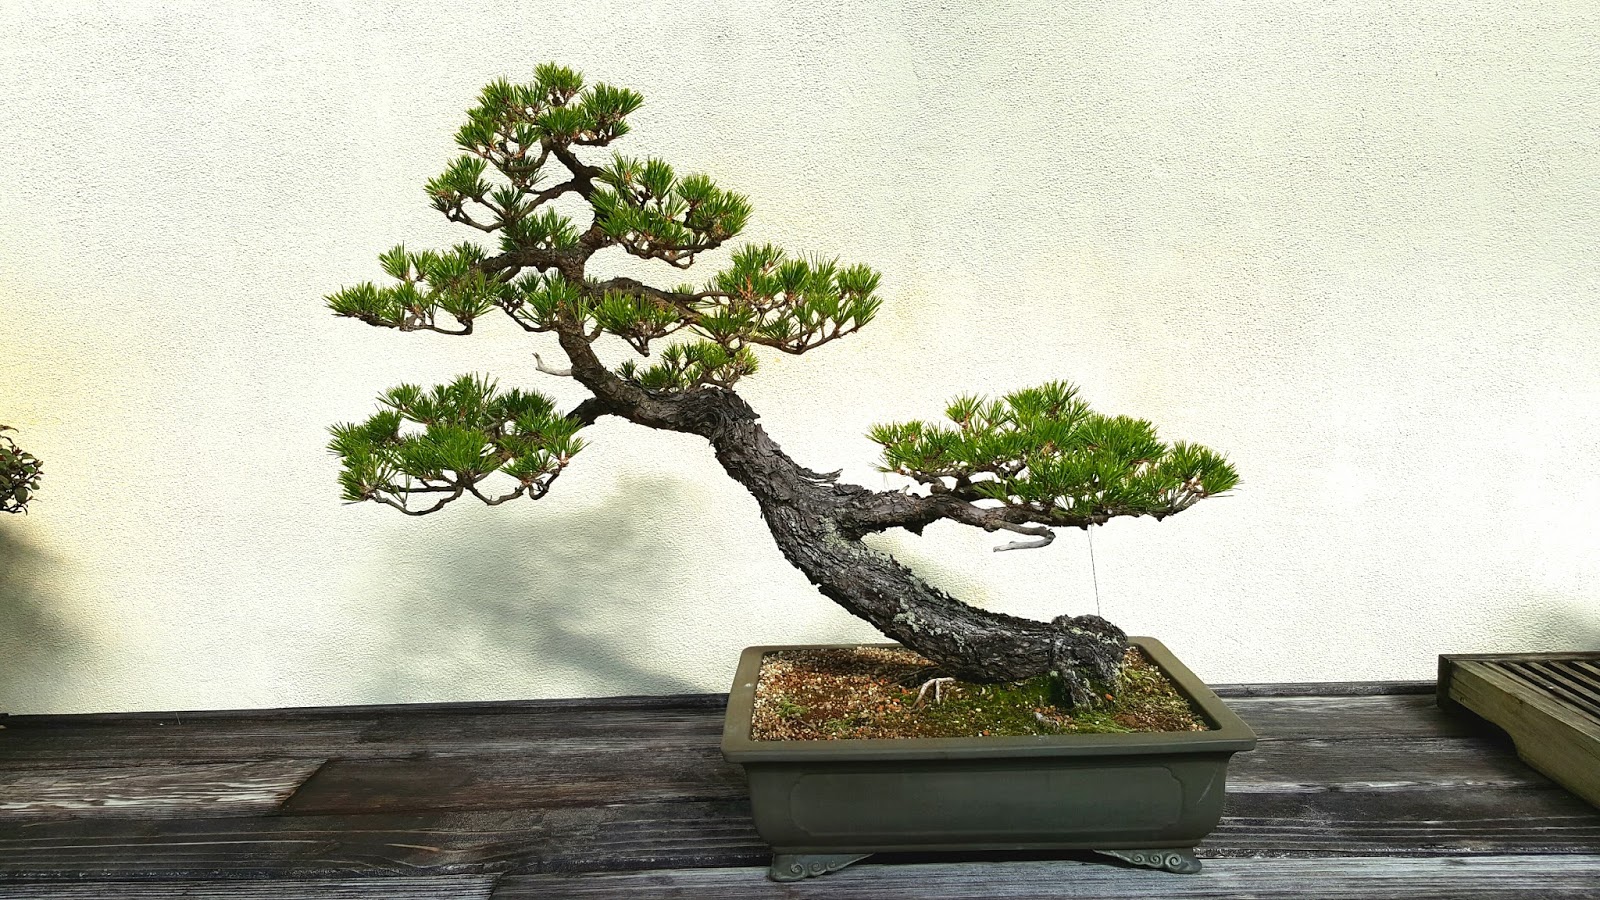  Bonsai  misadventures The bonsai  of the national bonsai  